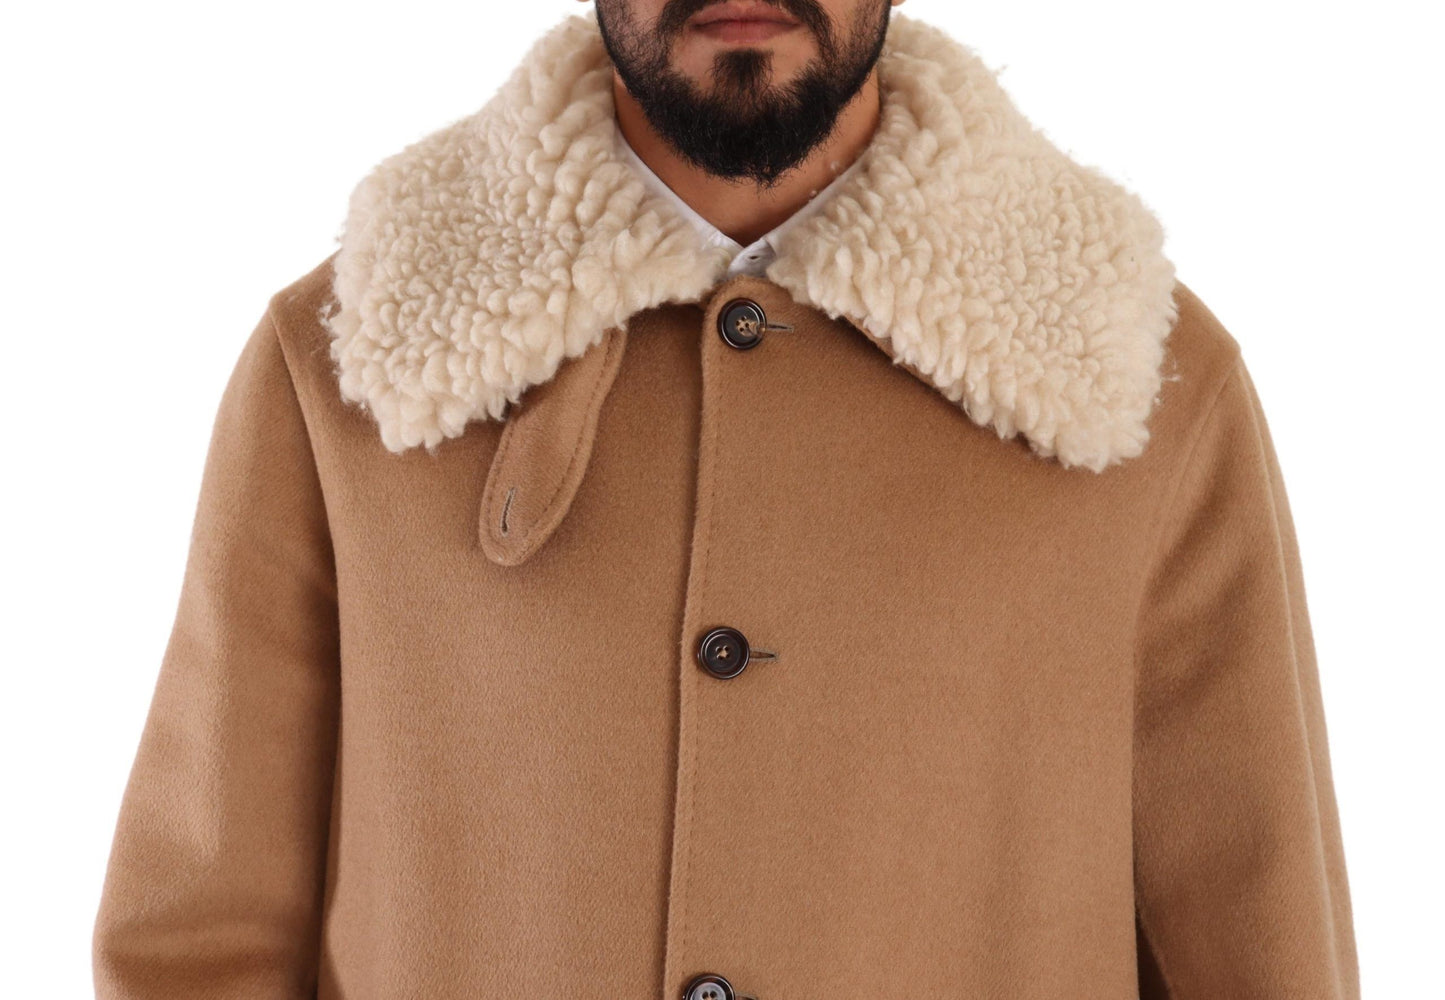 Dolce & Gabbana Beige Camel Skin Cashmere Shearling Overcoat Jacket